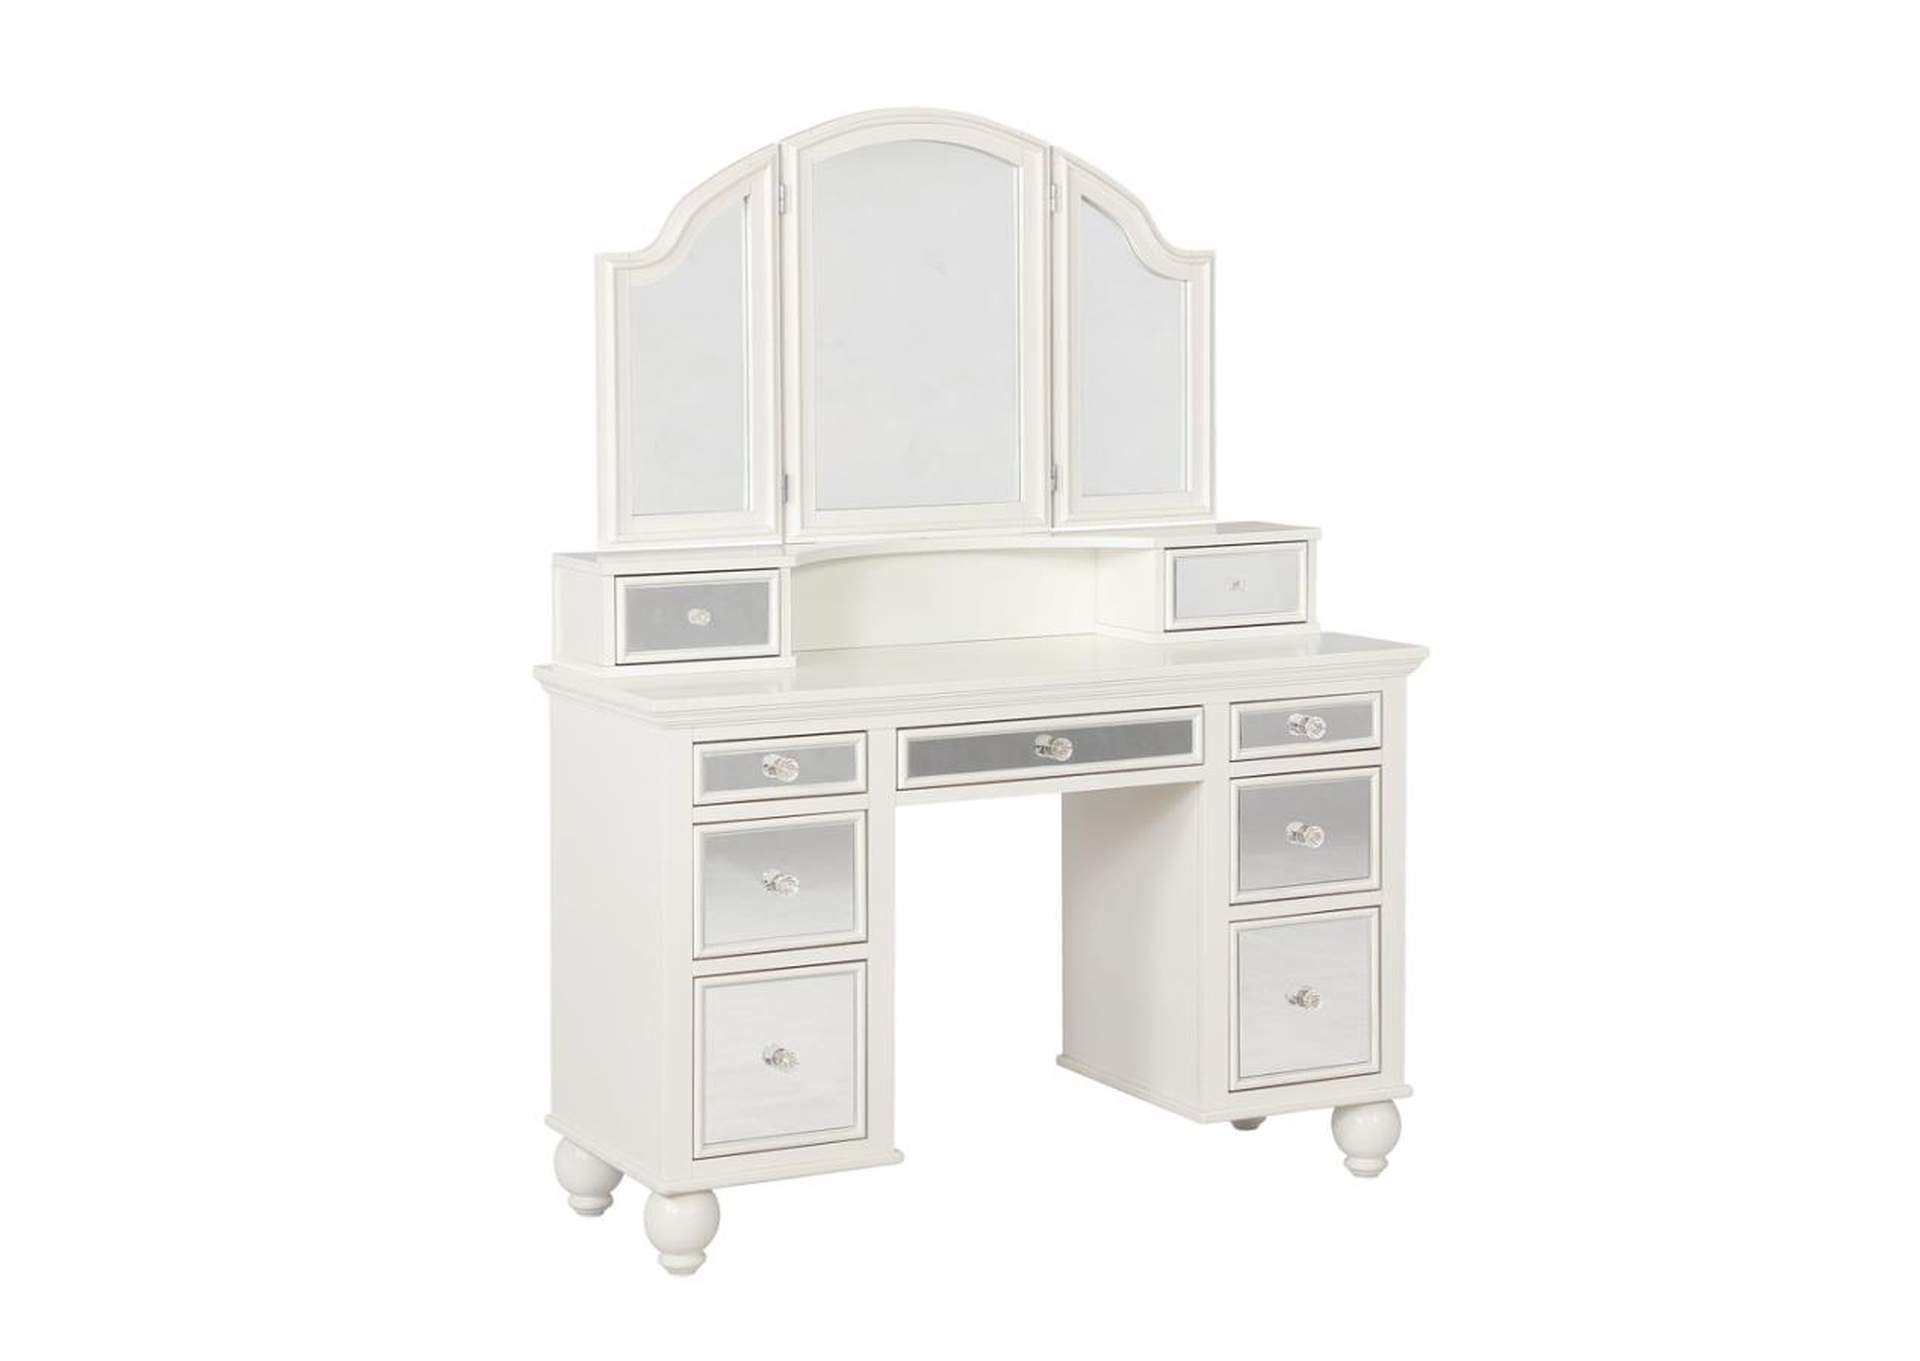 2-Piece Vanity Set White And Beige,Coaster Furniture